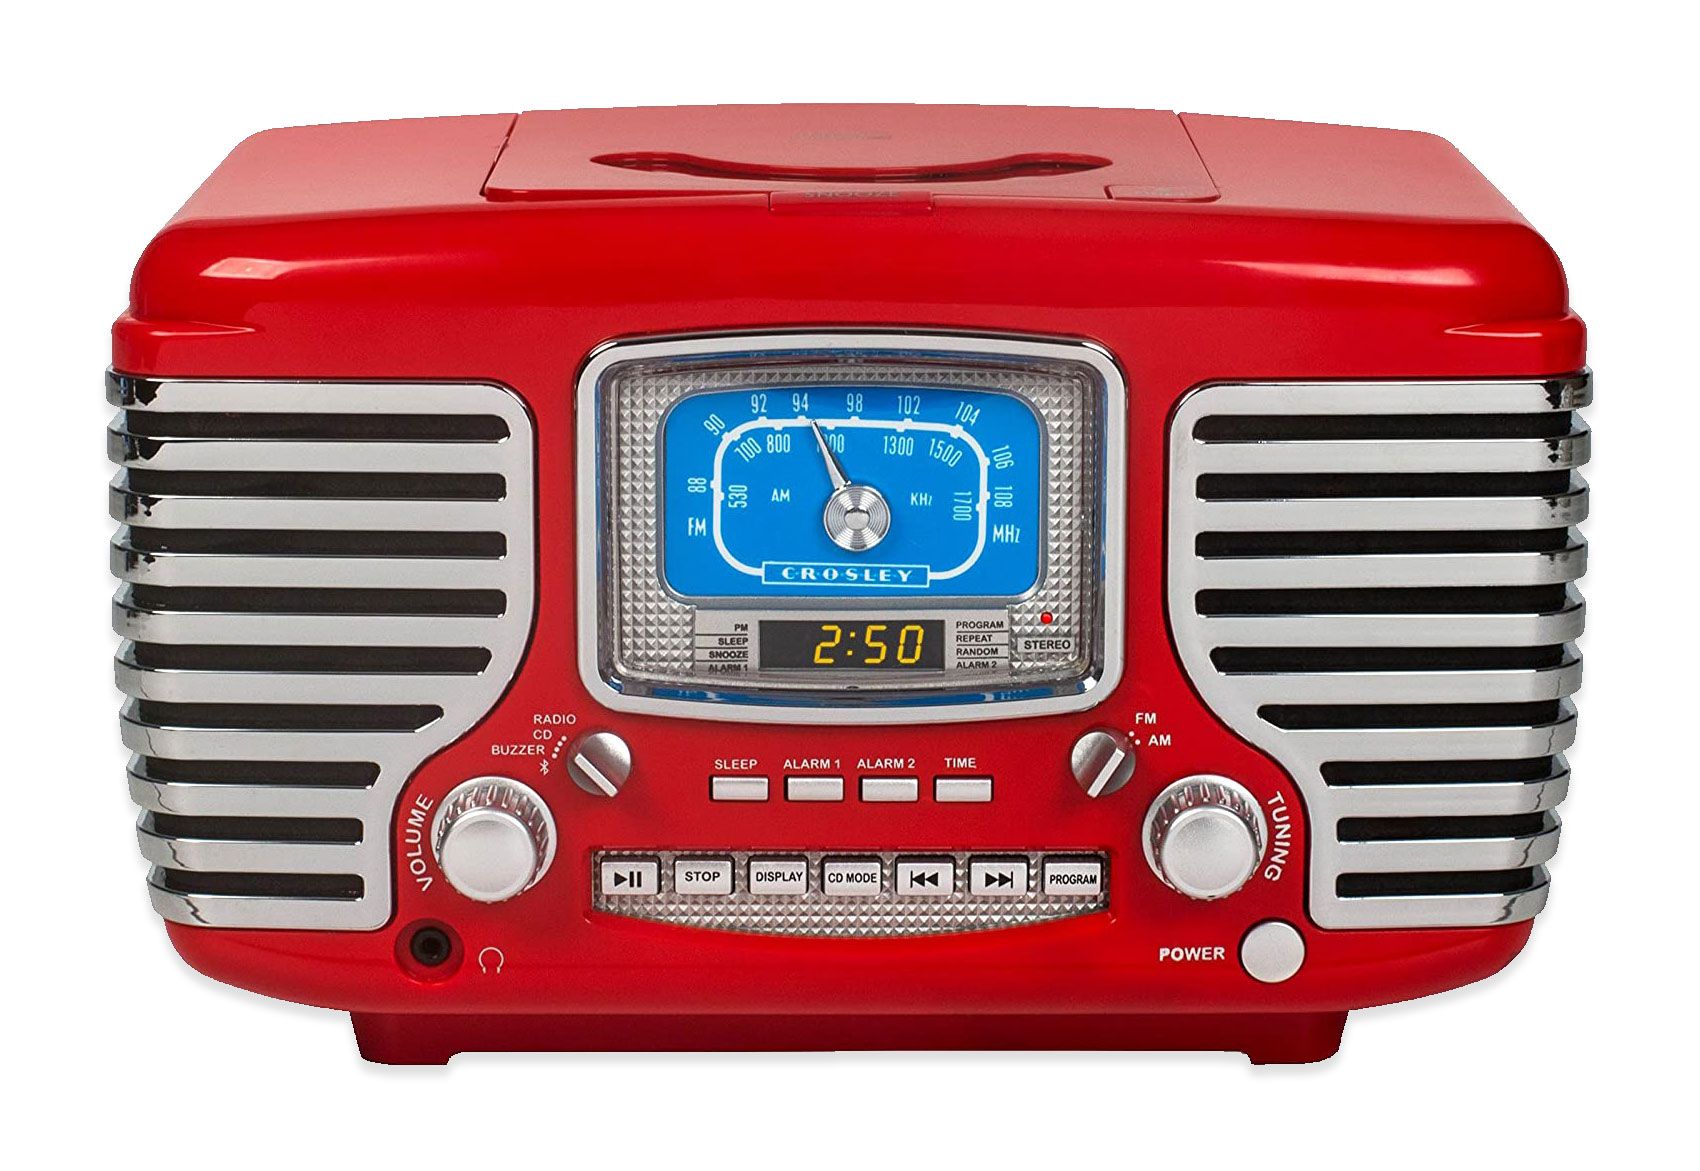 Crosley Corsair Radio with Bluetooth - Red